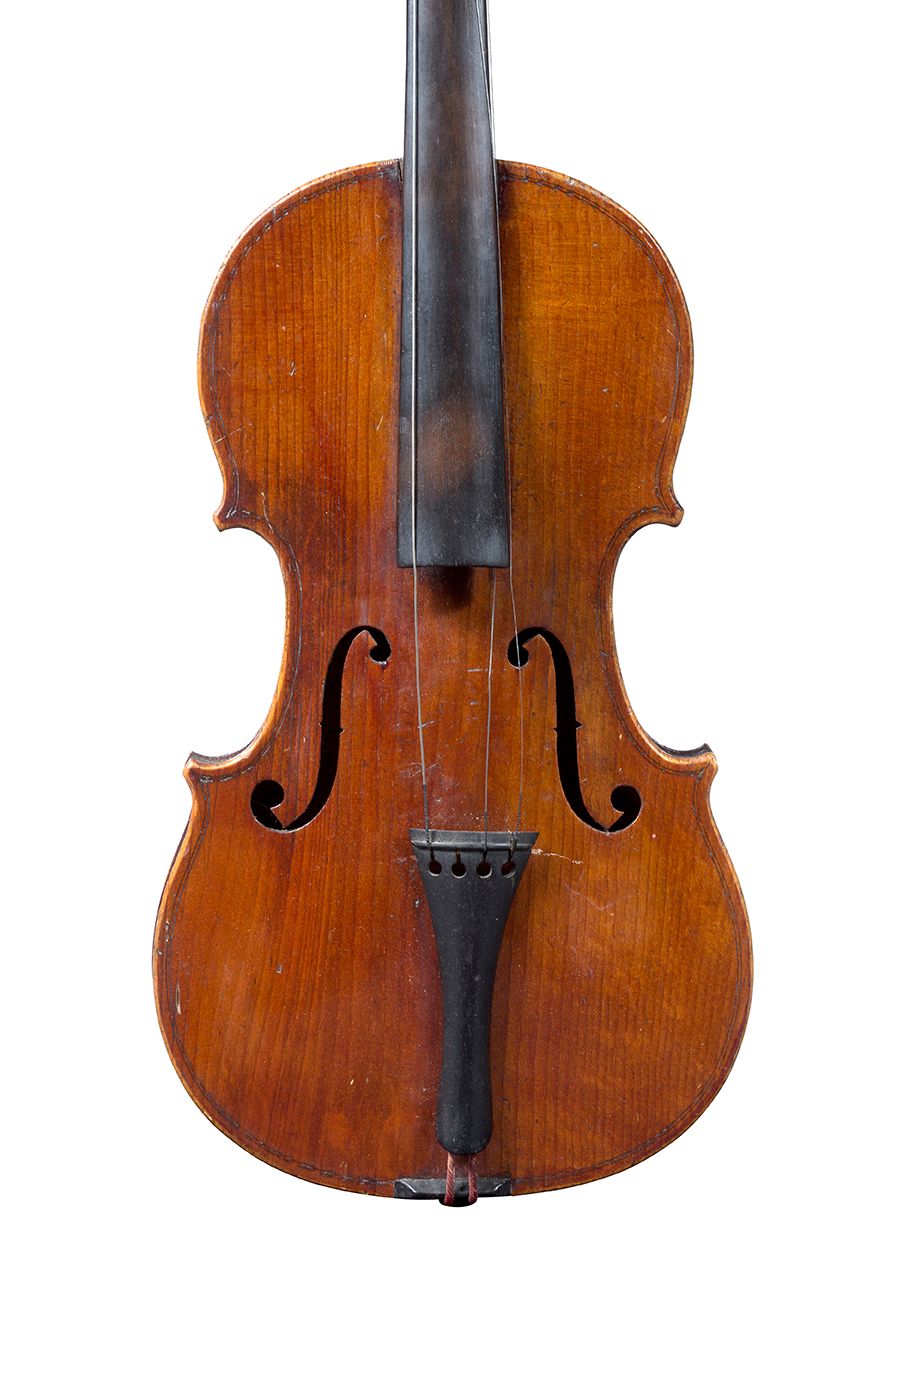 Null 学习小提琴
工业化生产的，不穿线的
琴颈上有结
状况良好 
背面362毫米